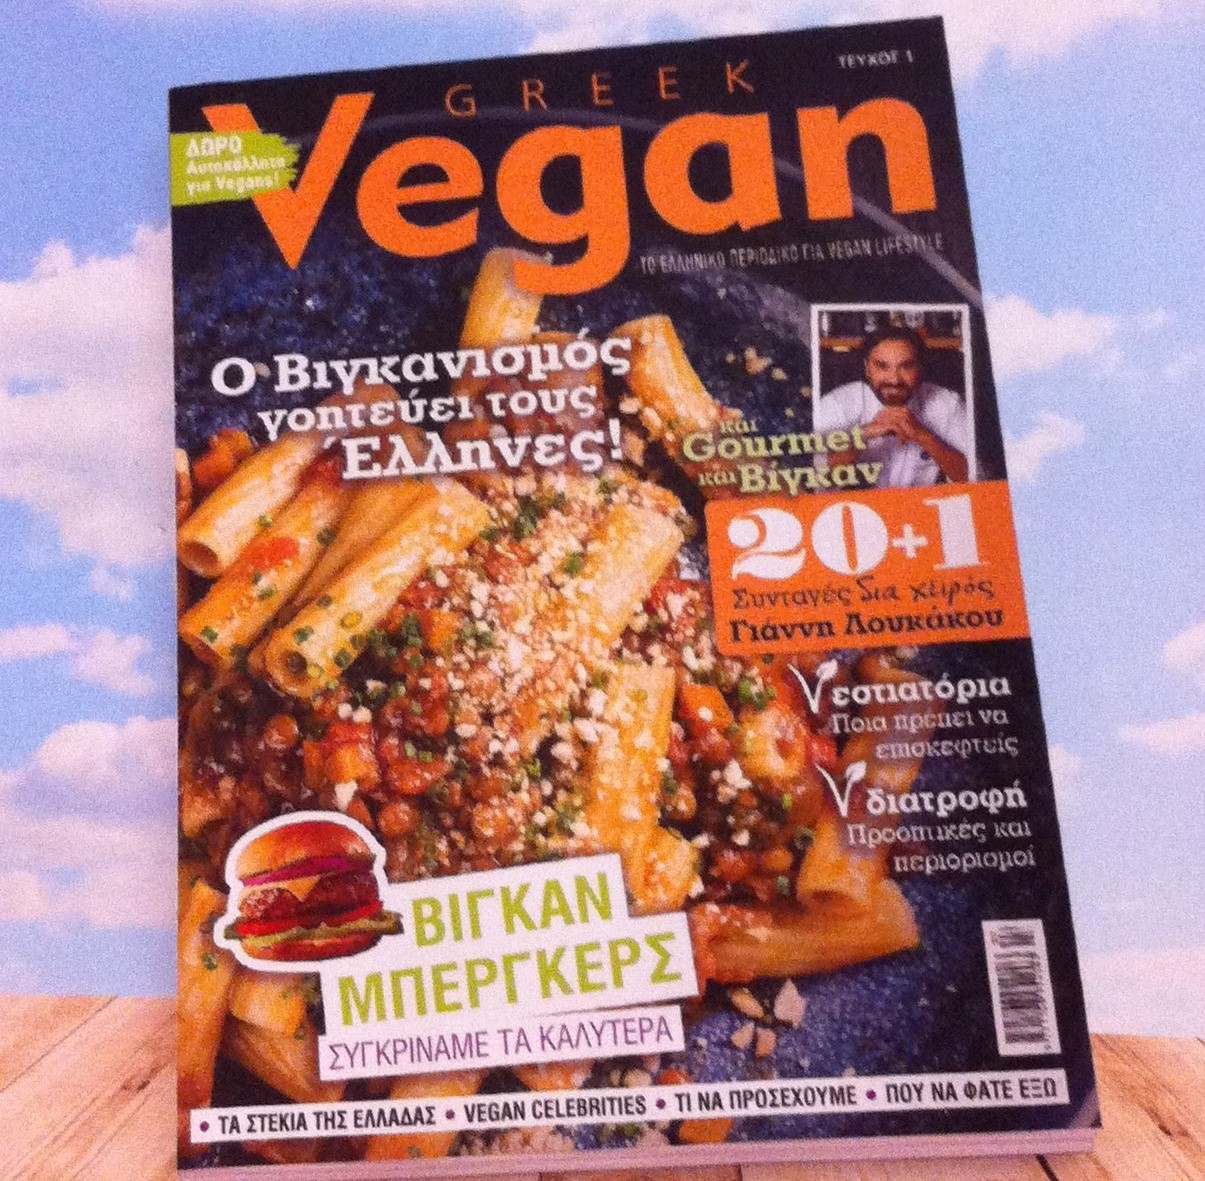 "Greek Vegan Magazine". To Ελληνικό vegan περιοδικό!